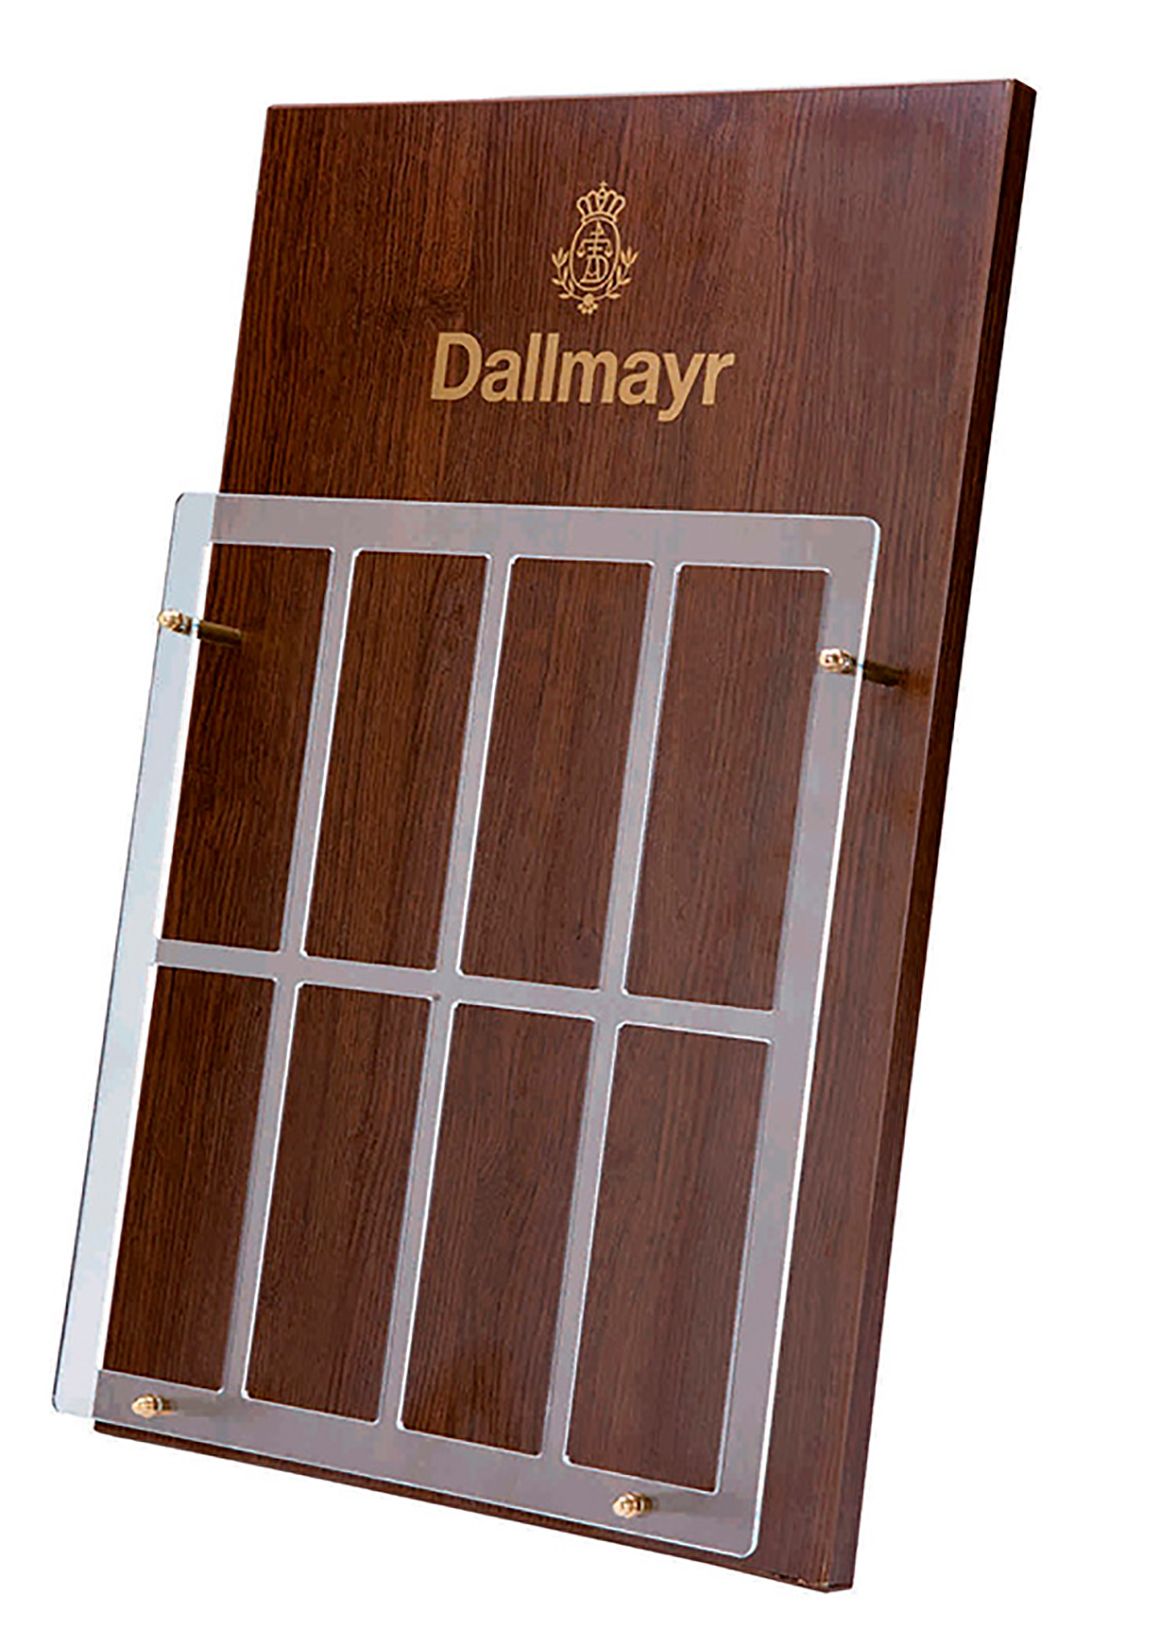 Counter Display for Dallmayr